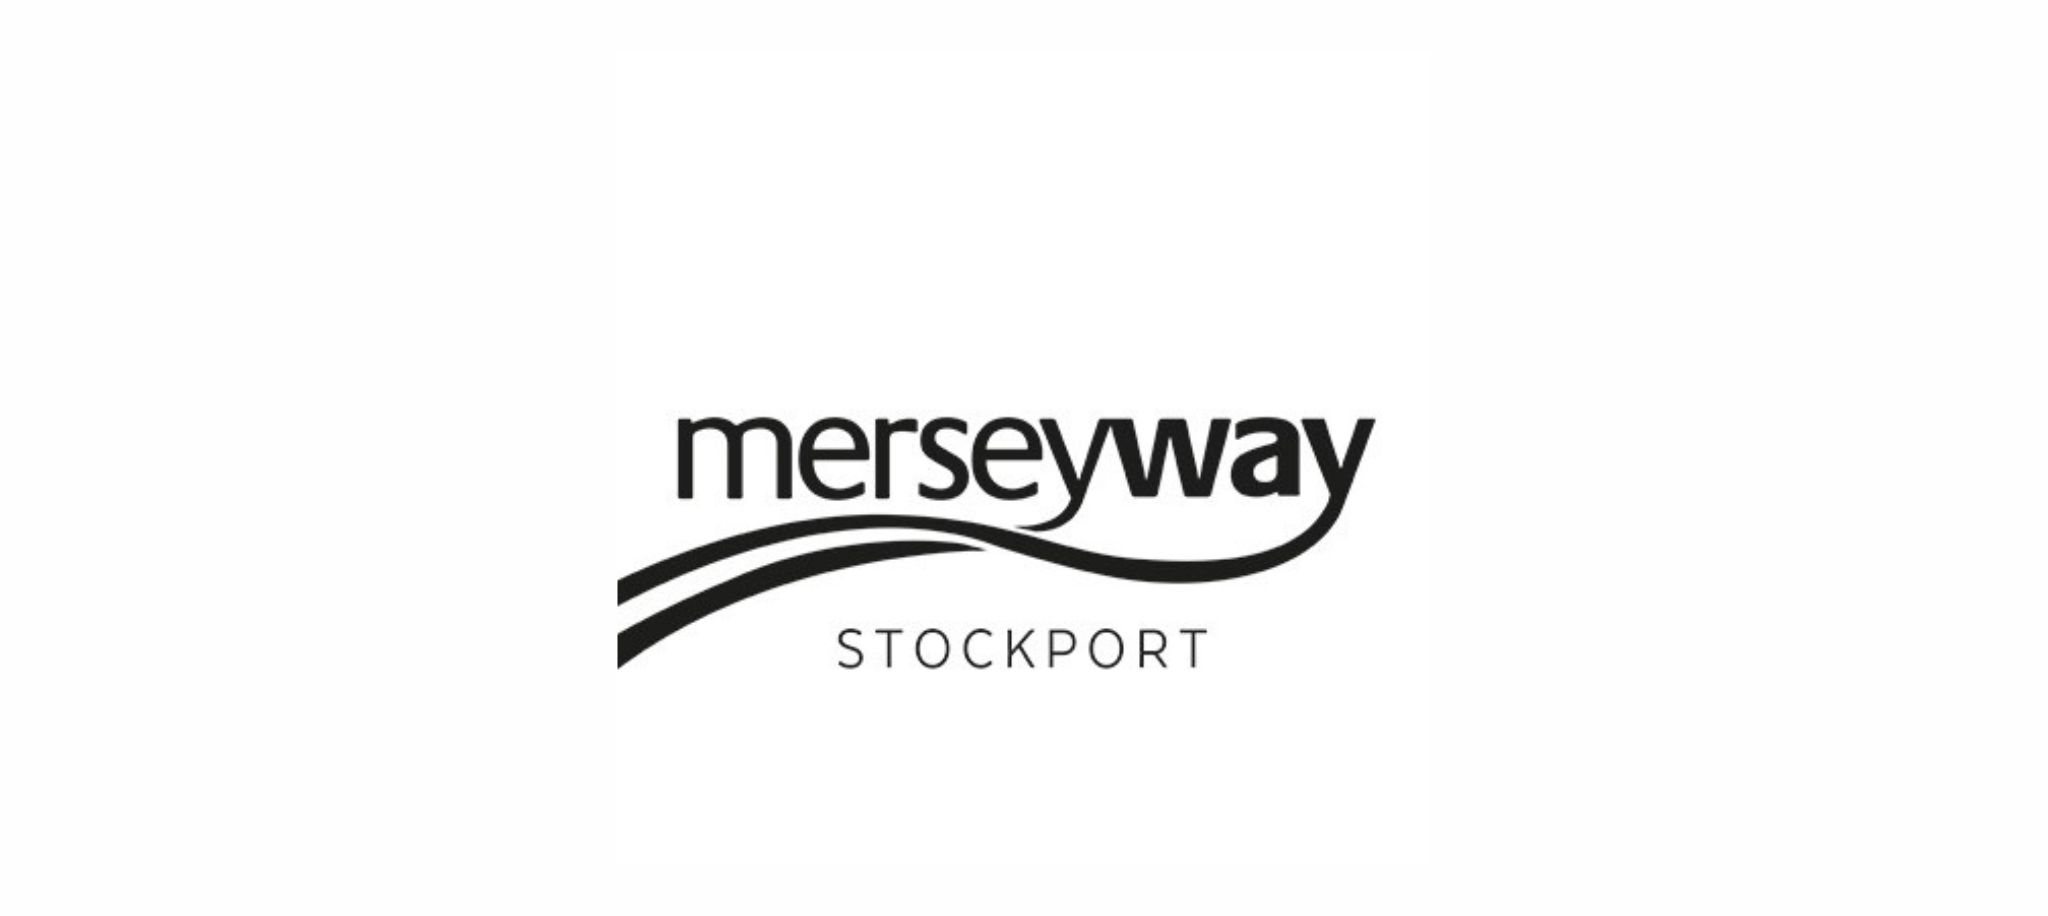 merseyway-header-revo